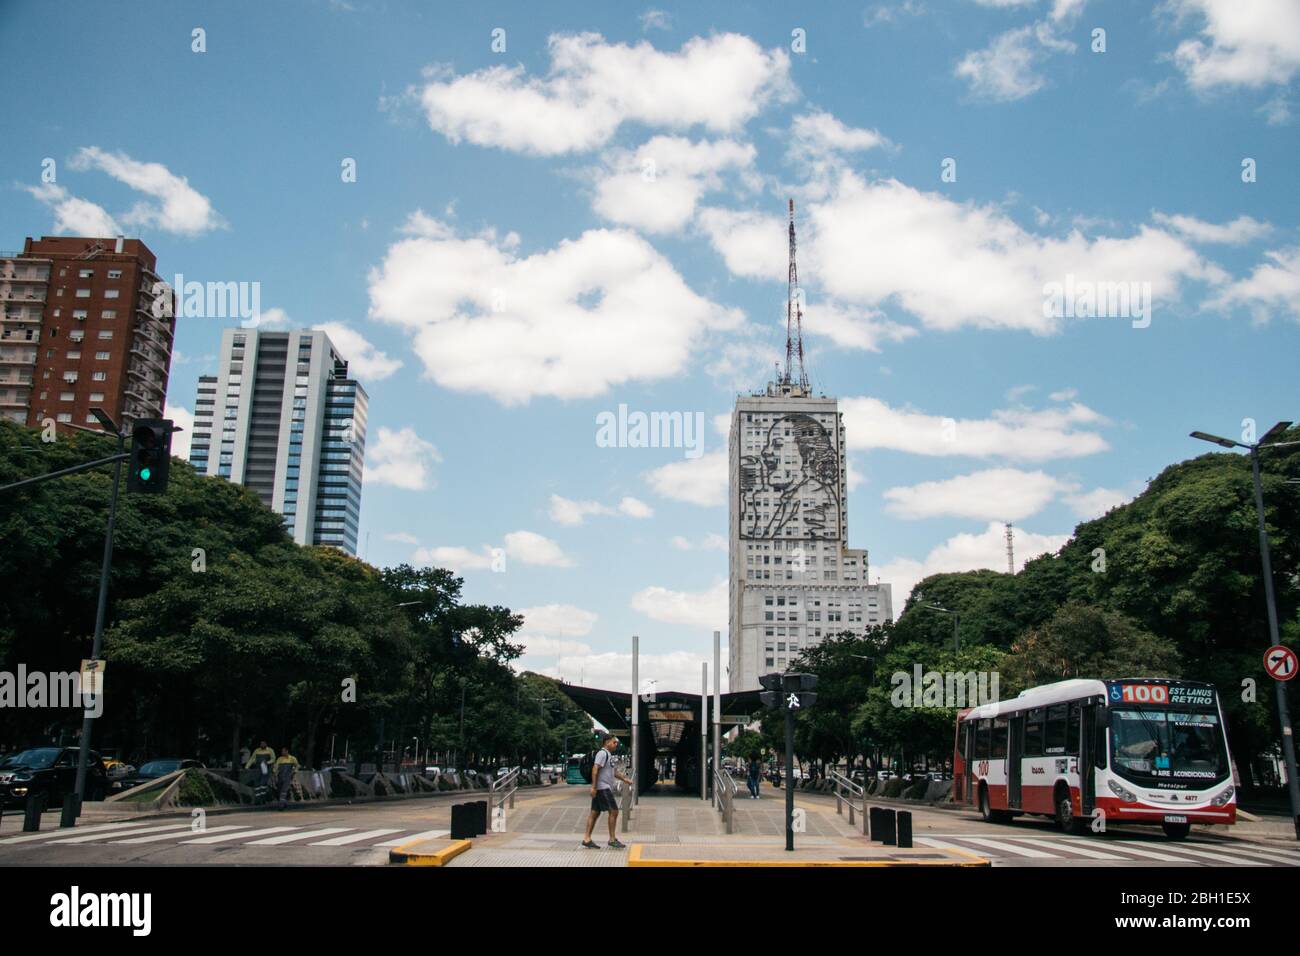 Buenos Aires, Argentine Banque D'Images